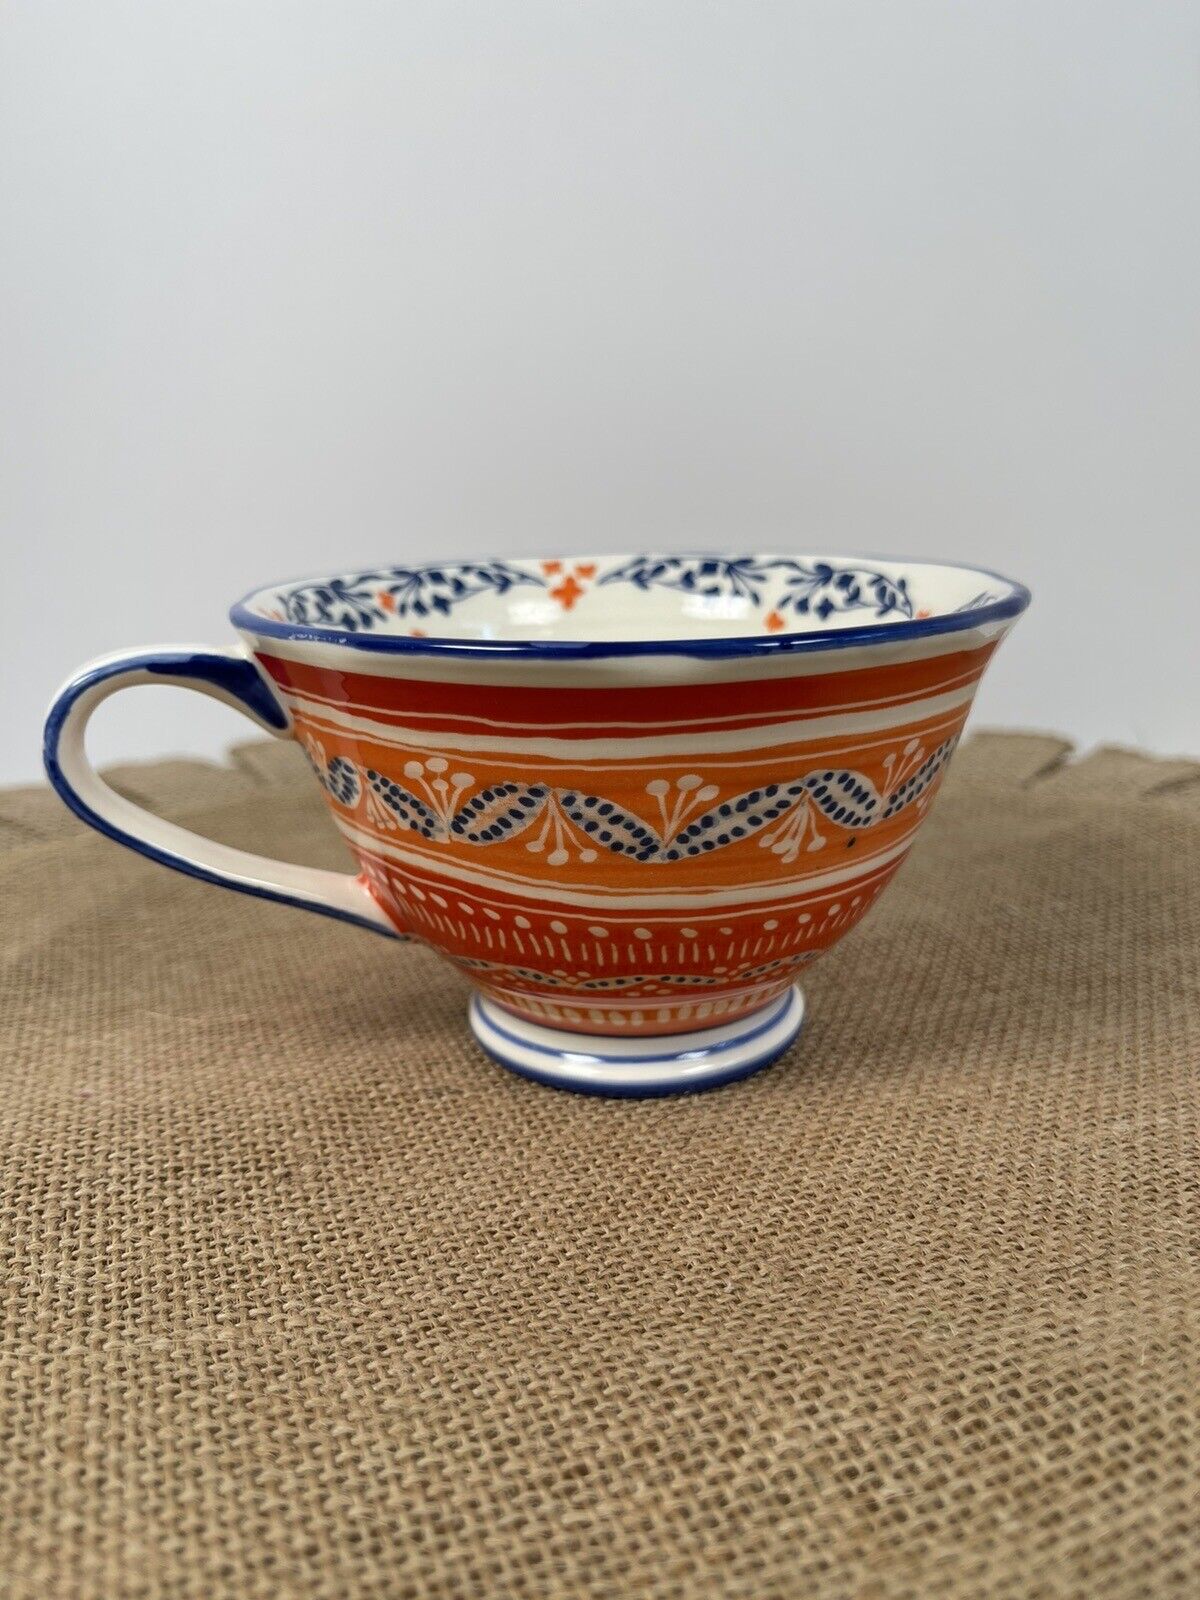 Anthropologie Gather Round MUG Coffee Tea Cup Mug Blue Red Orange Doodle Floral